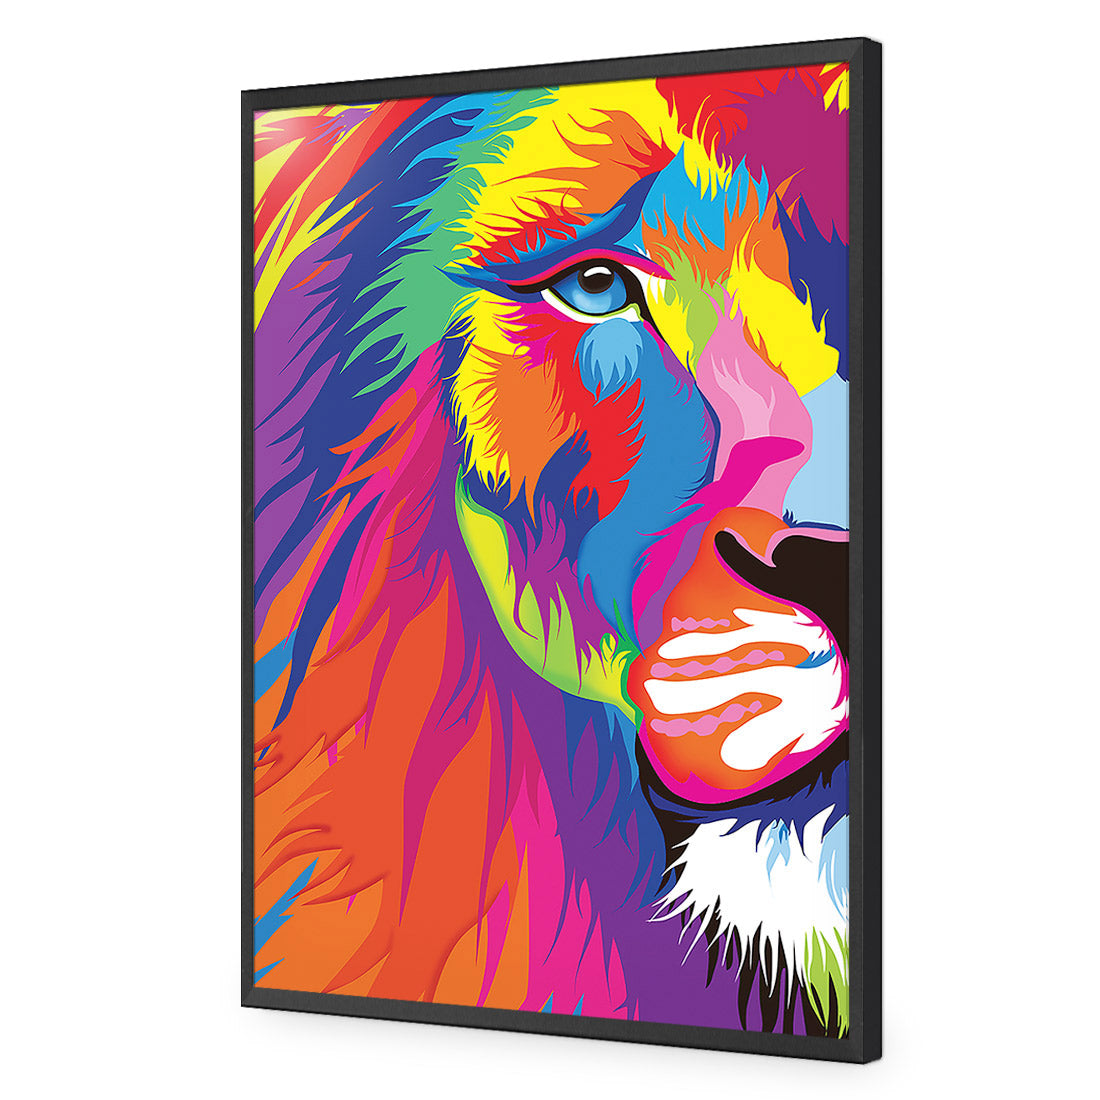 Magnificent Lion Acrylic Glass Art